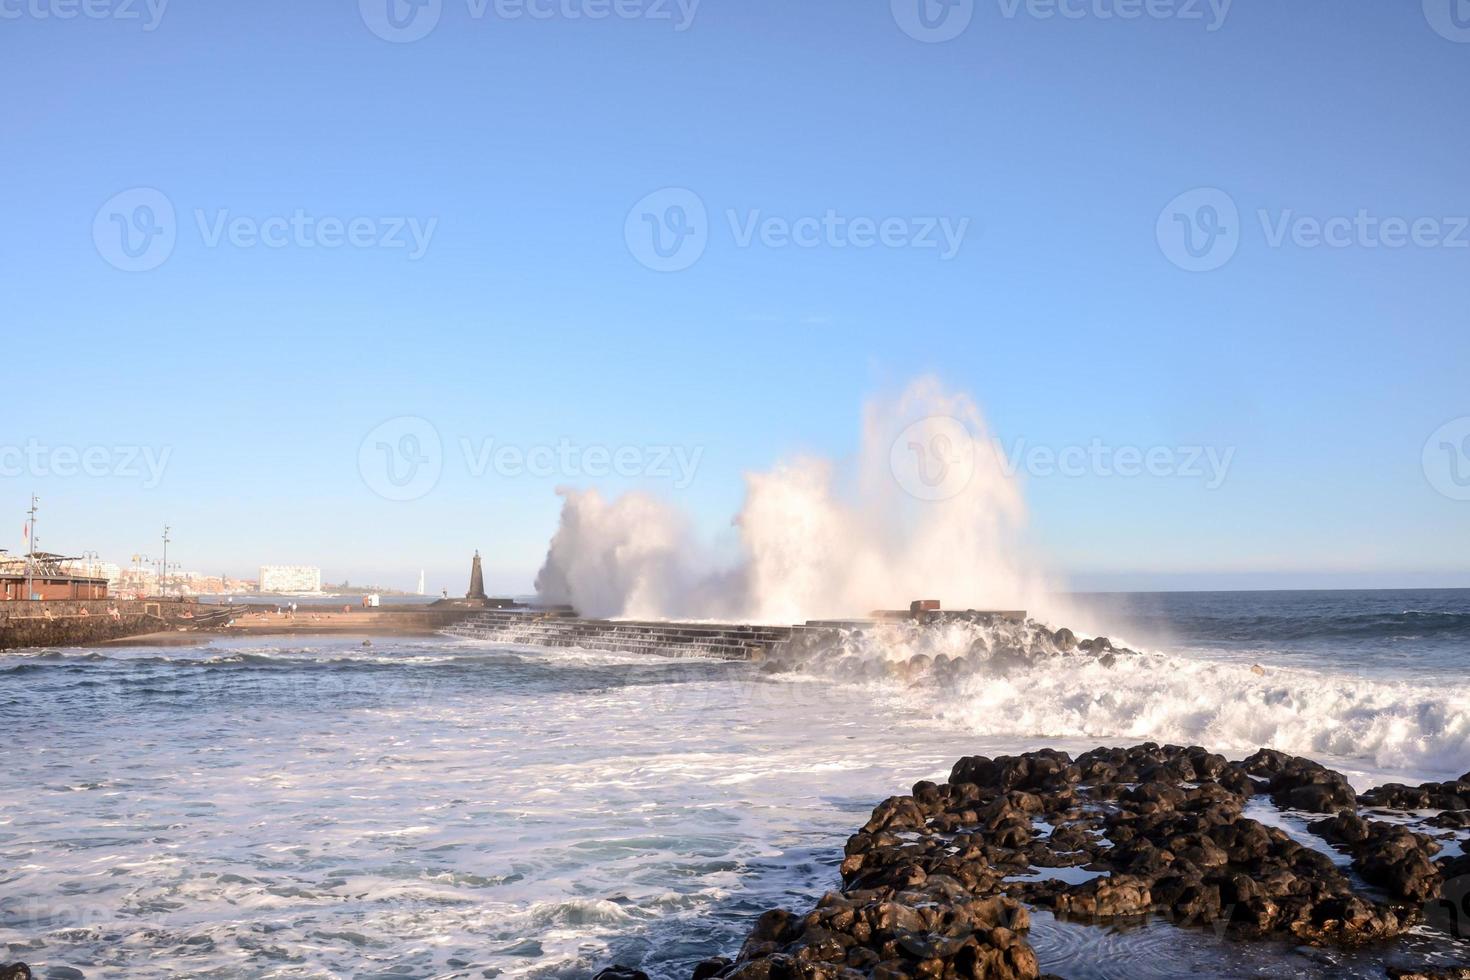 enormes olas del mar foto